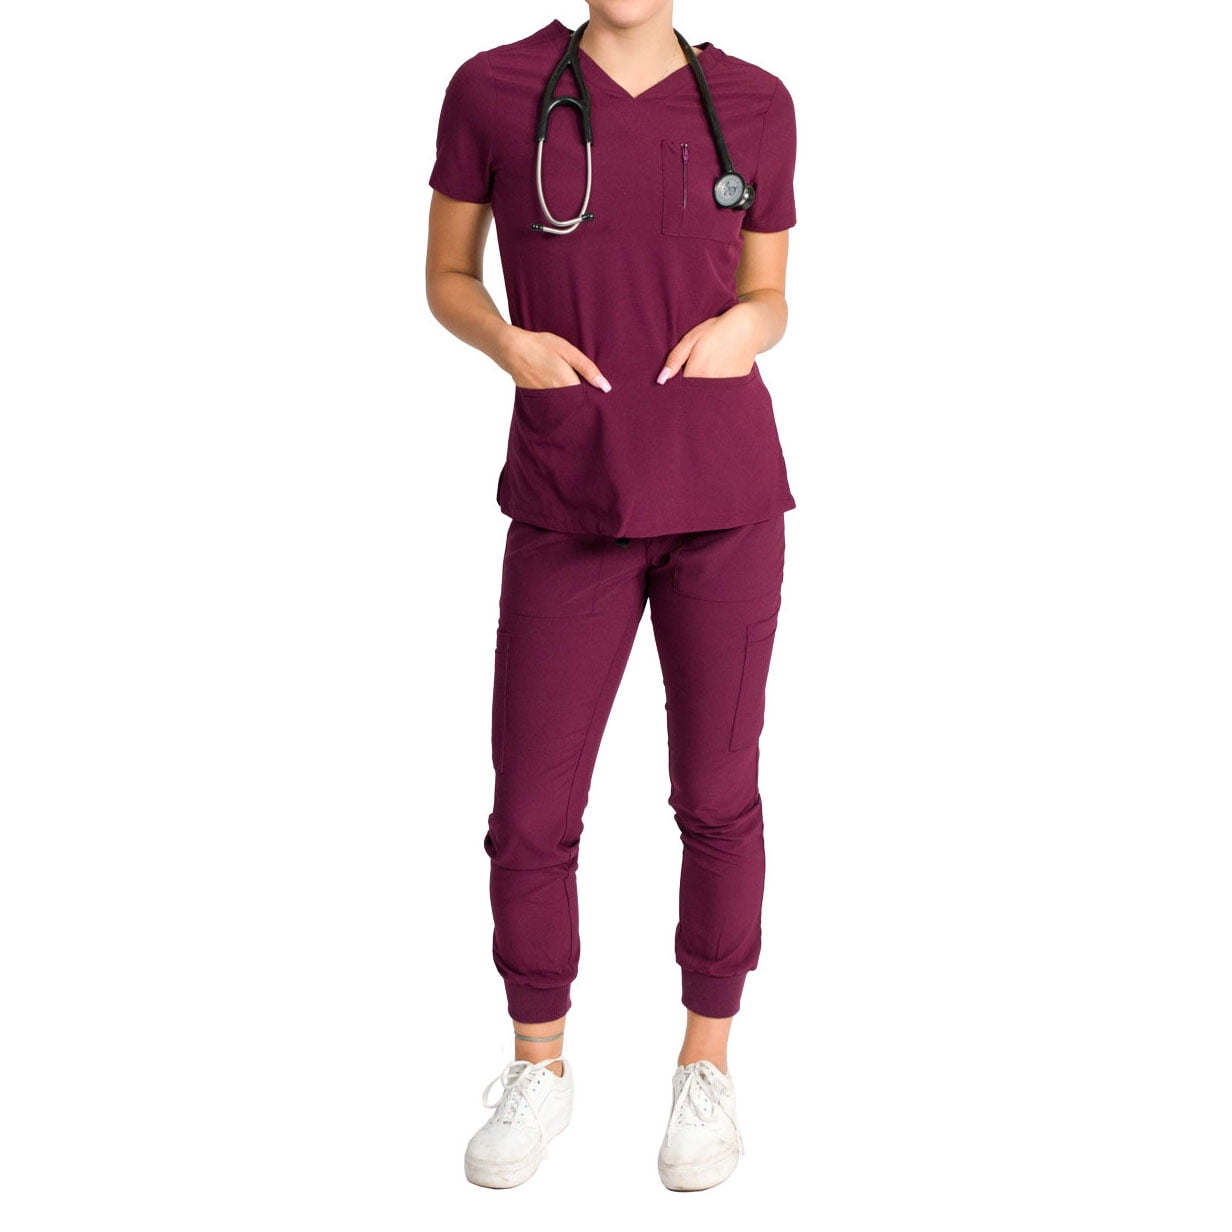 V Neck Fashion Rib Scrubs Uniforms Top Pants PS1116 Stretch Women Nursing Scrubs Set 